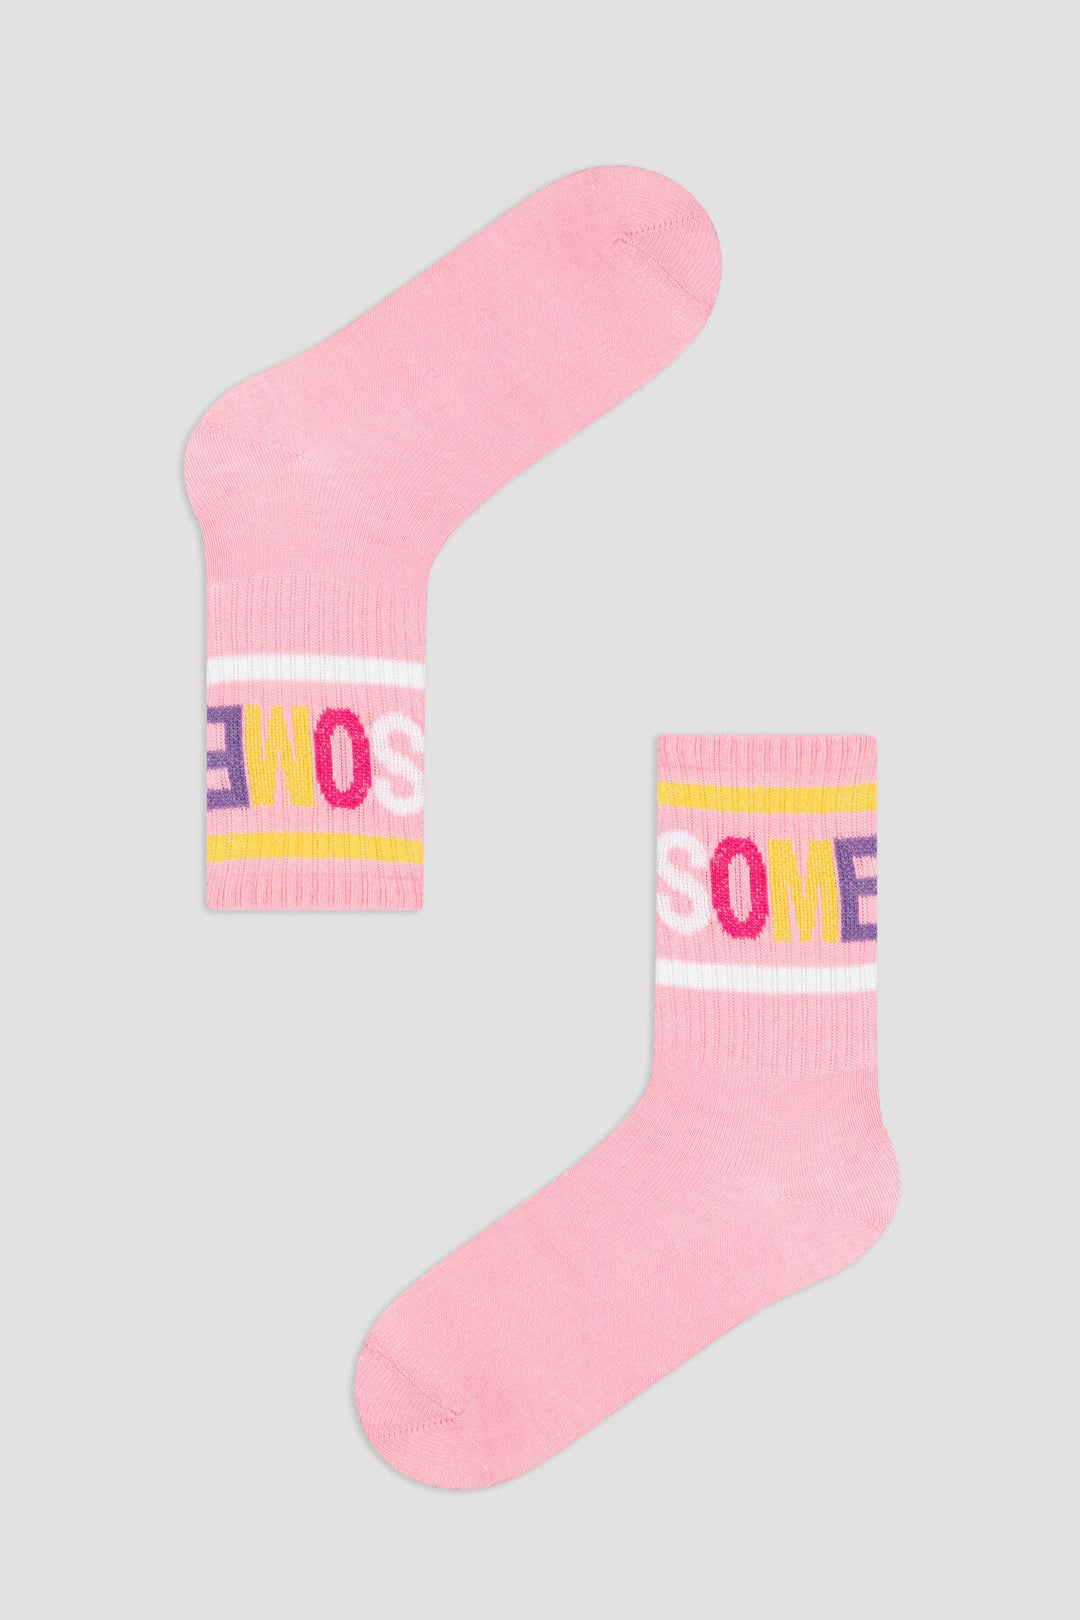 Girls Awesome 2In1 Socket Socks